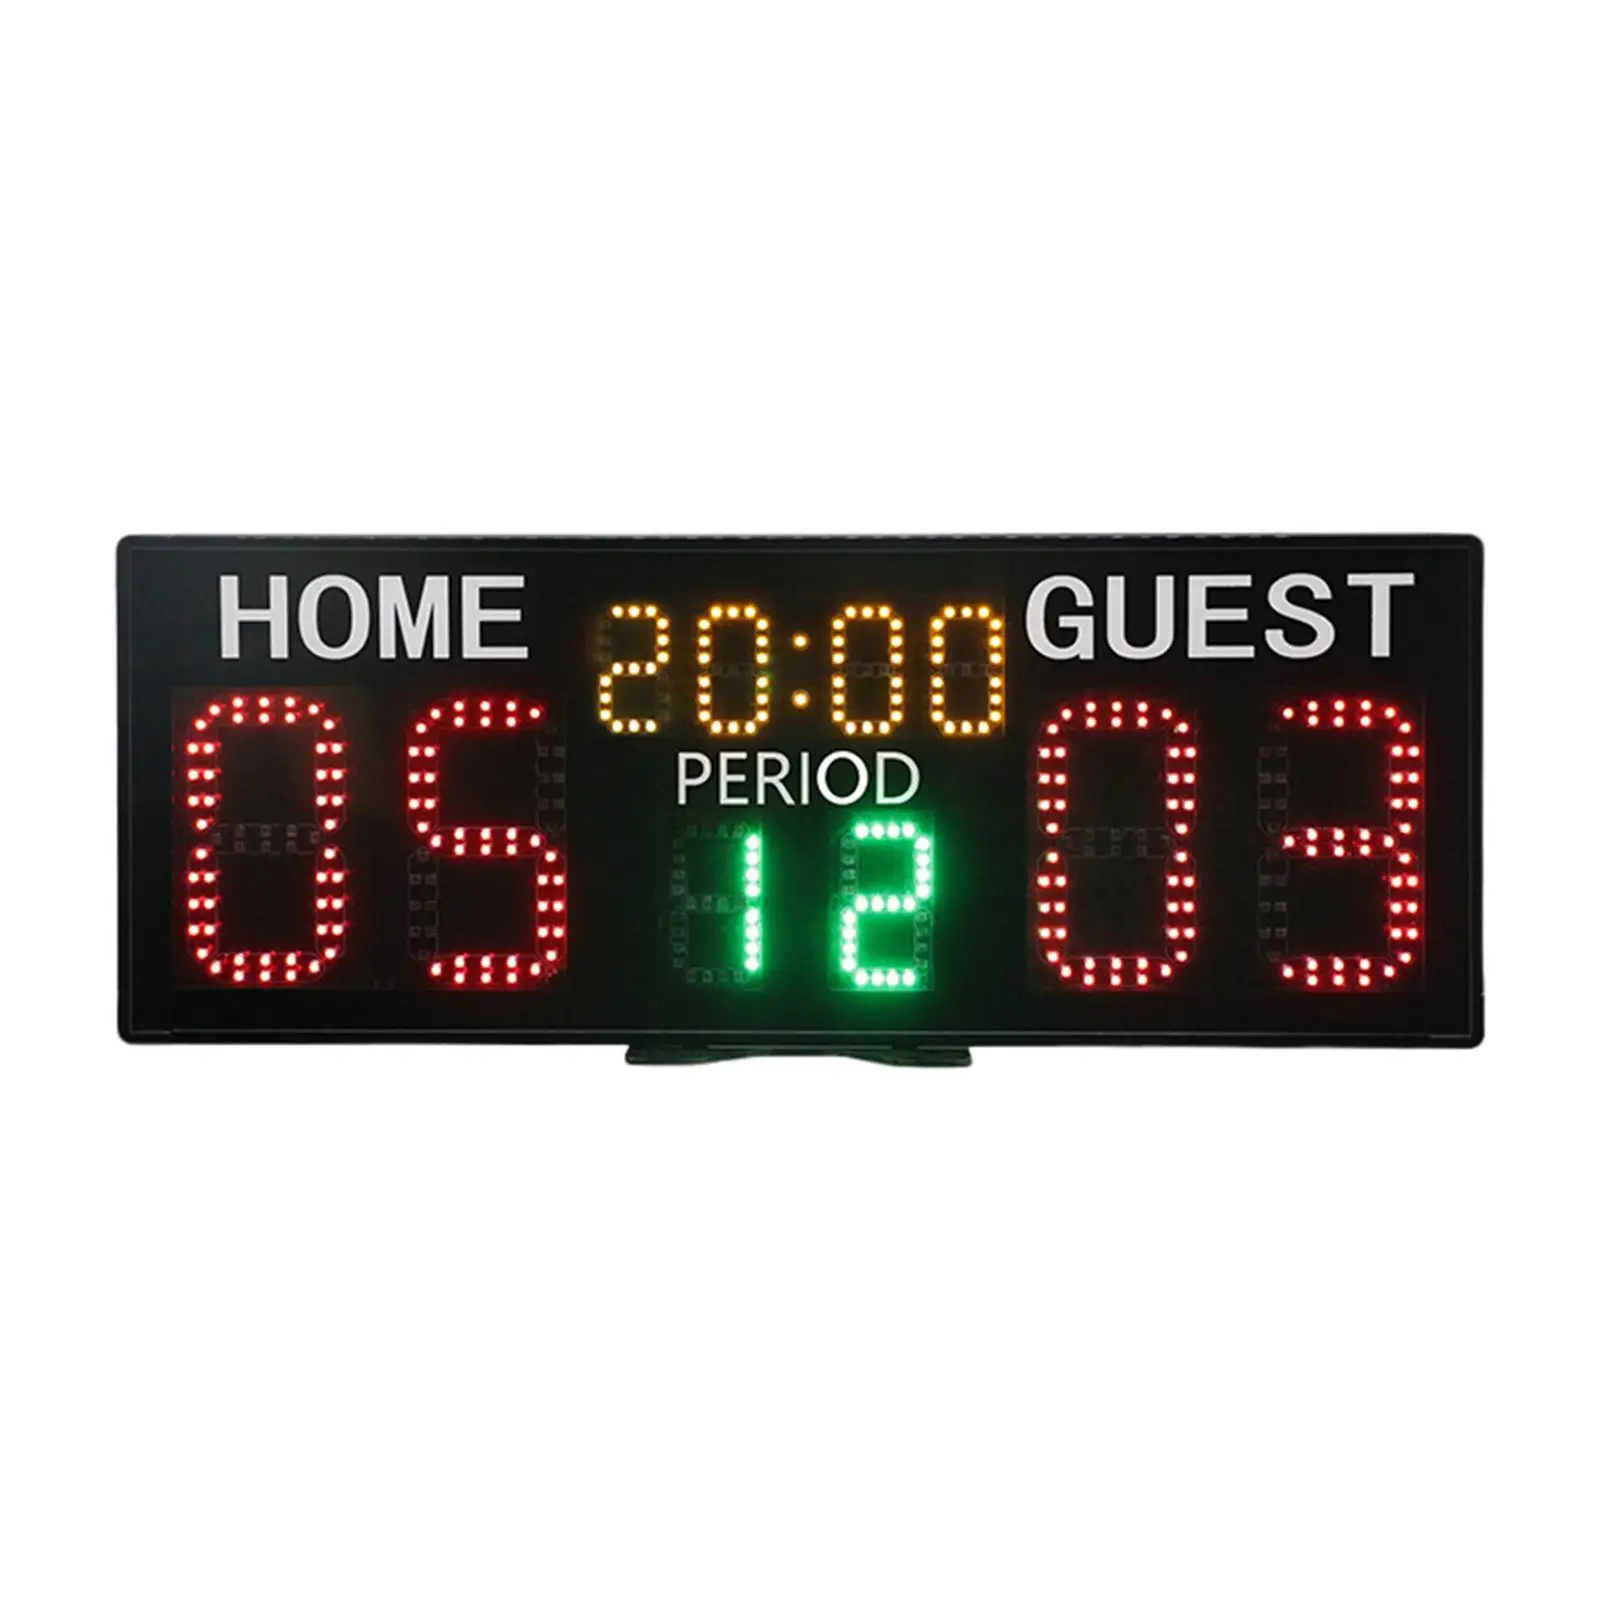 Electronic Scoreboard Tabletop Tennis Score Keeper Digital Score Board for Soccer Softball Basketball Table Tennis Games